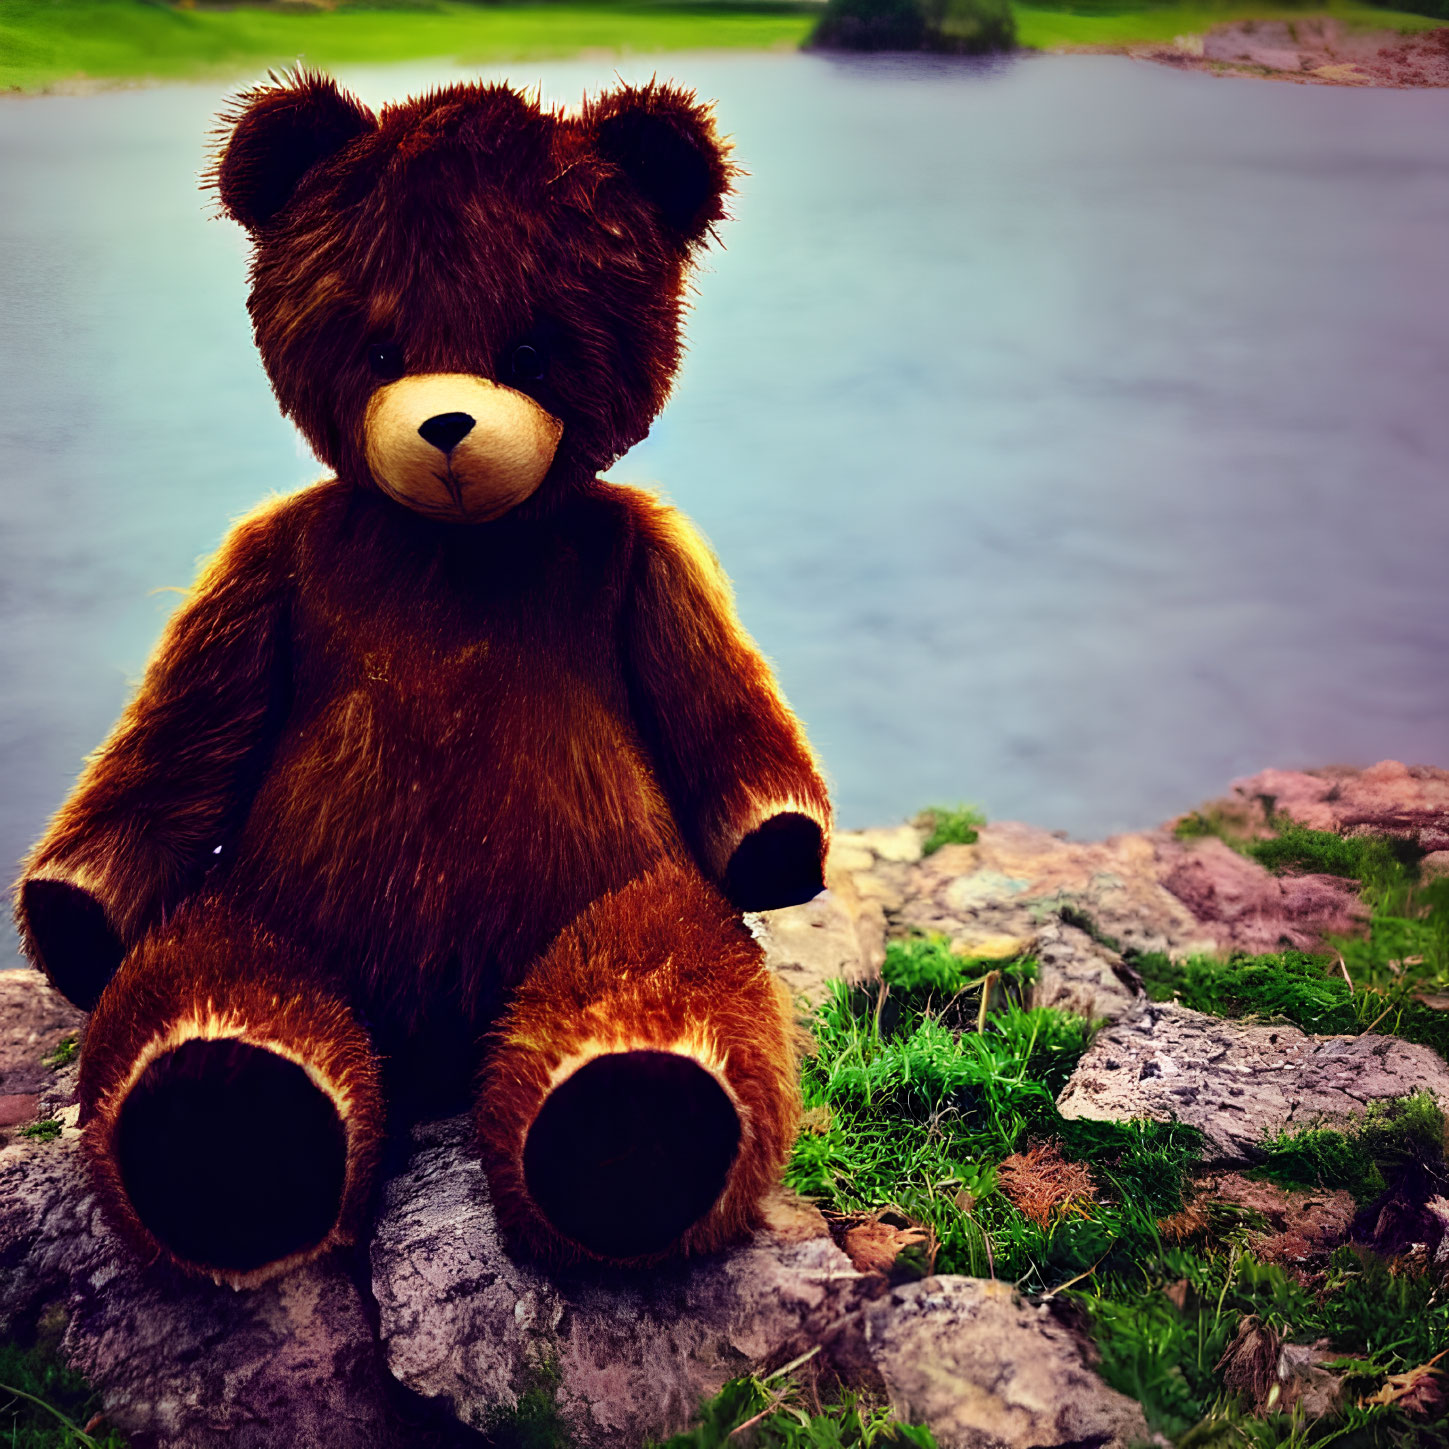 Plush teddy bear on rock by serene lake & lush greenery